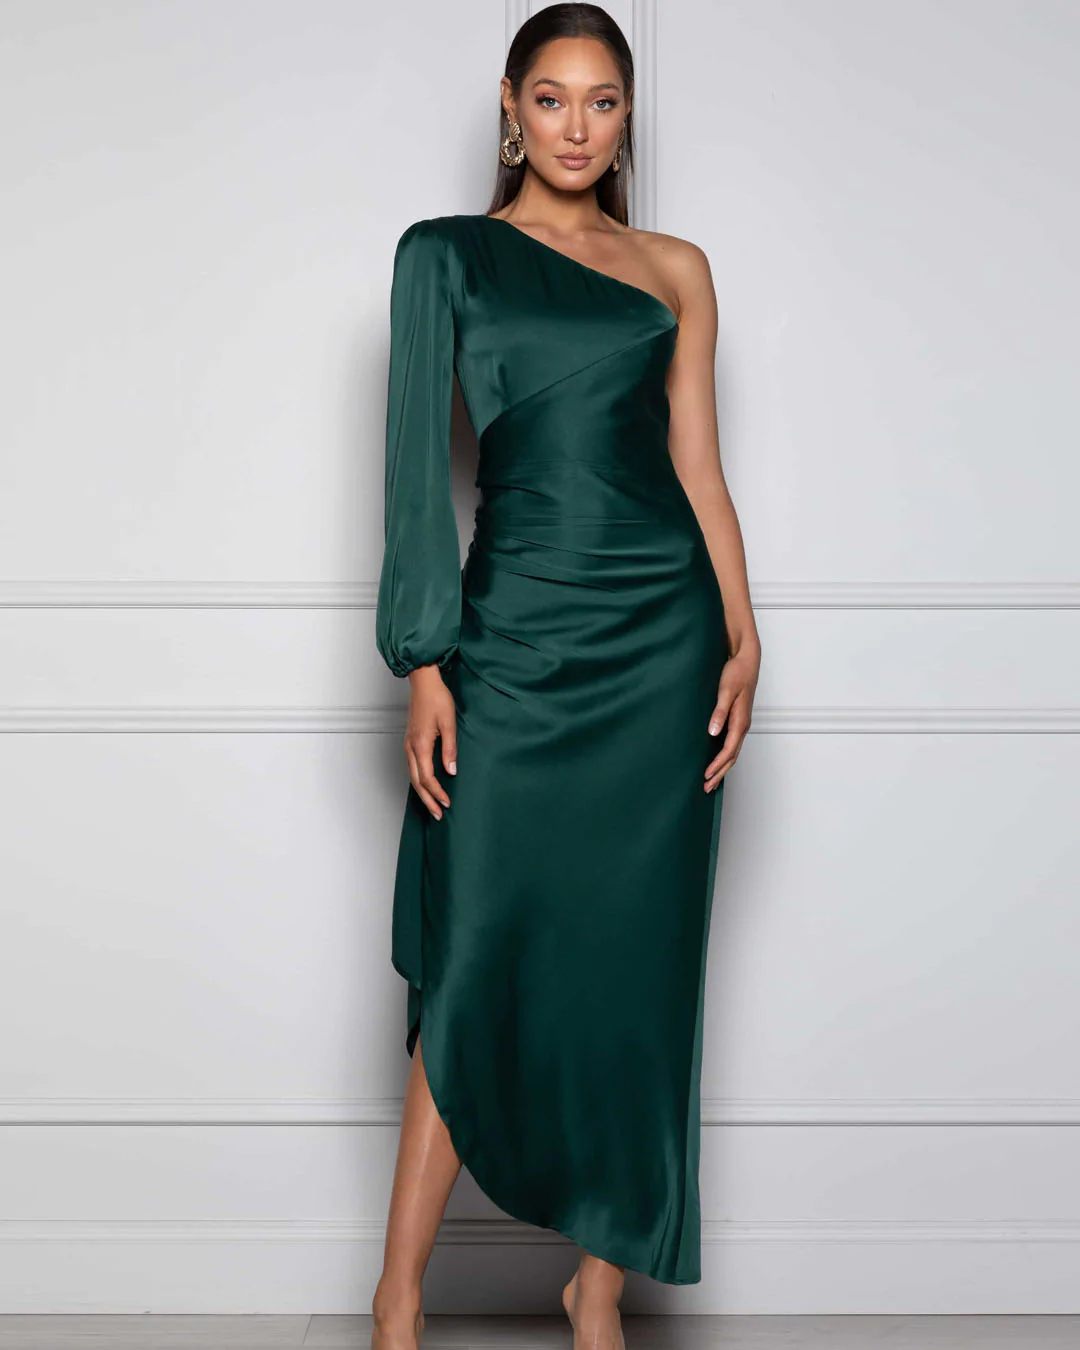 emerald green bridesmaid dresses simple one shoulder elle zeitoune